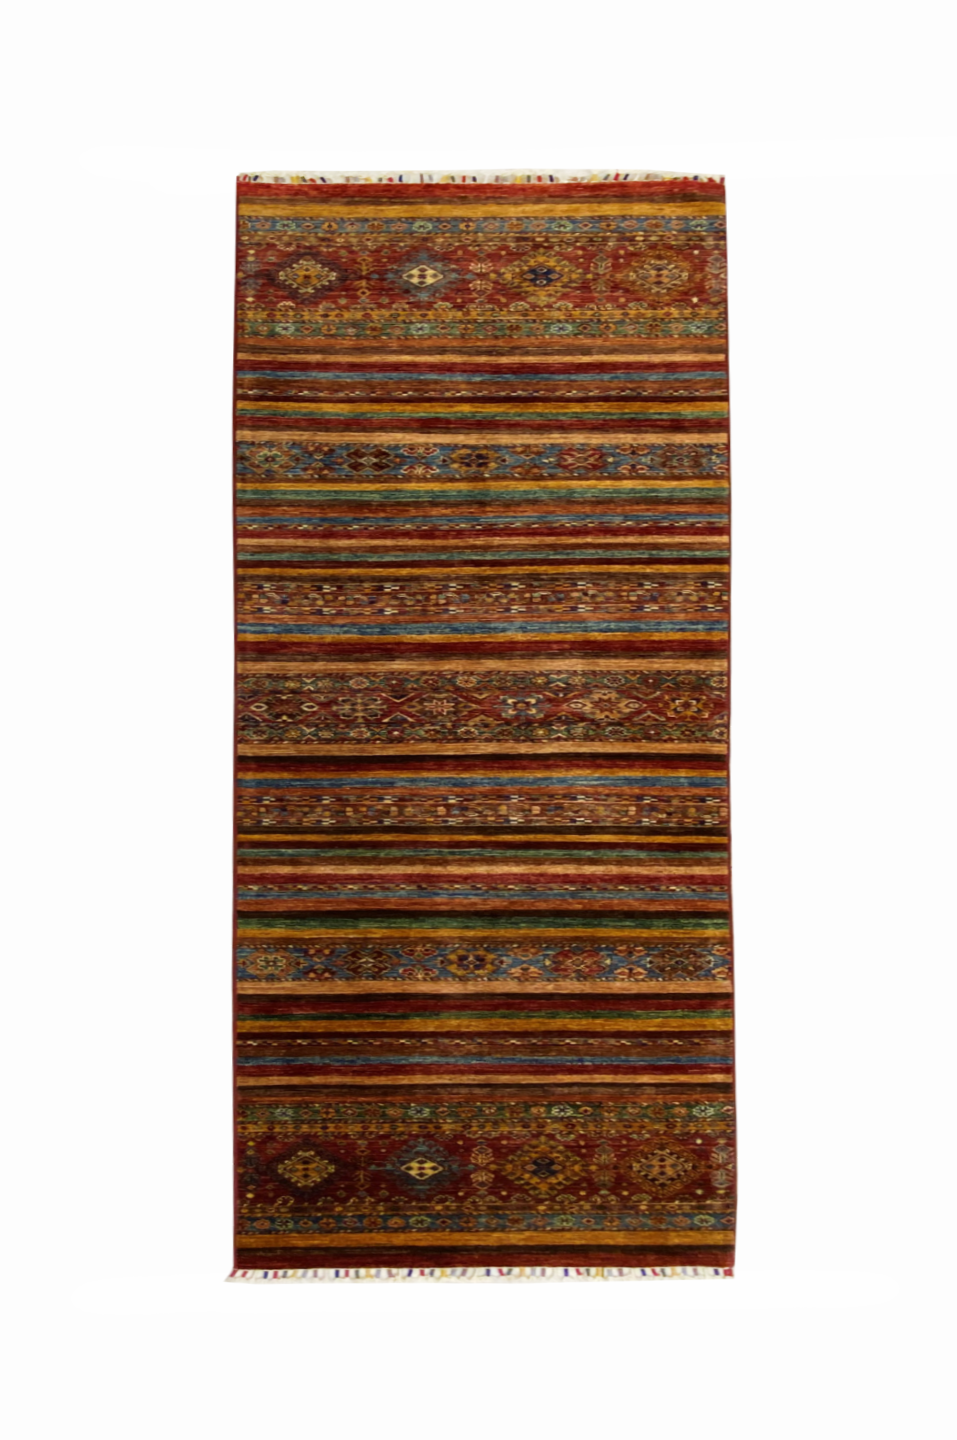 Şirvan Bicolor Carpet 290 x 79 cm